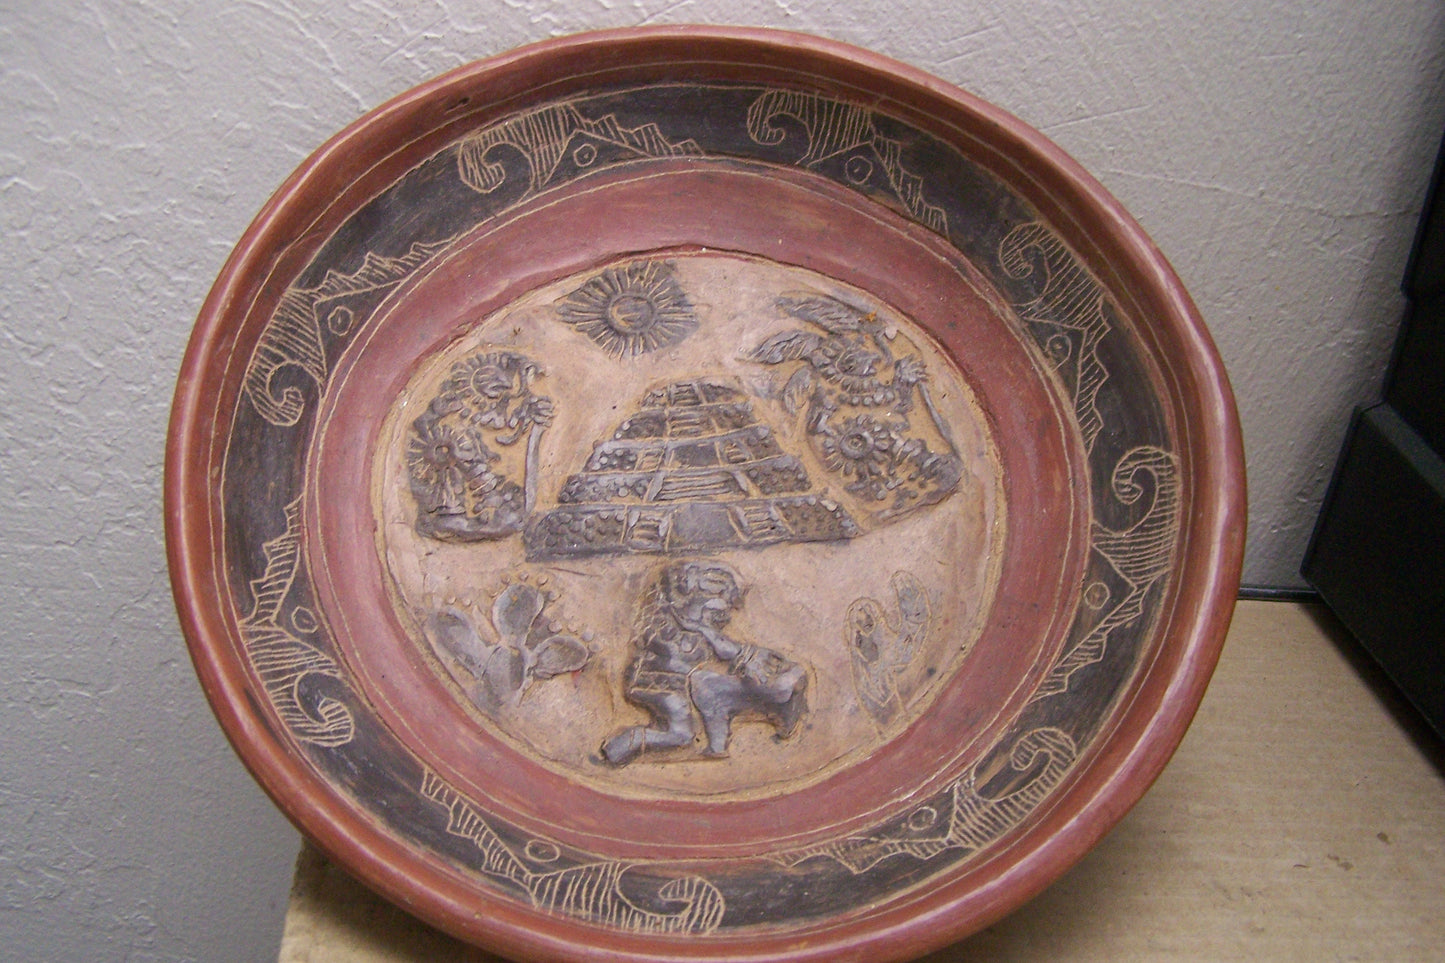 Vintage 1960s Molcajete Tripod Bowl with Ancient Mexican Designs, Aztec, Maya, etc. - Mexico